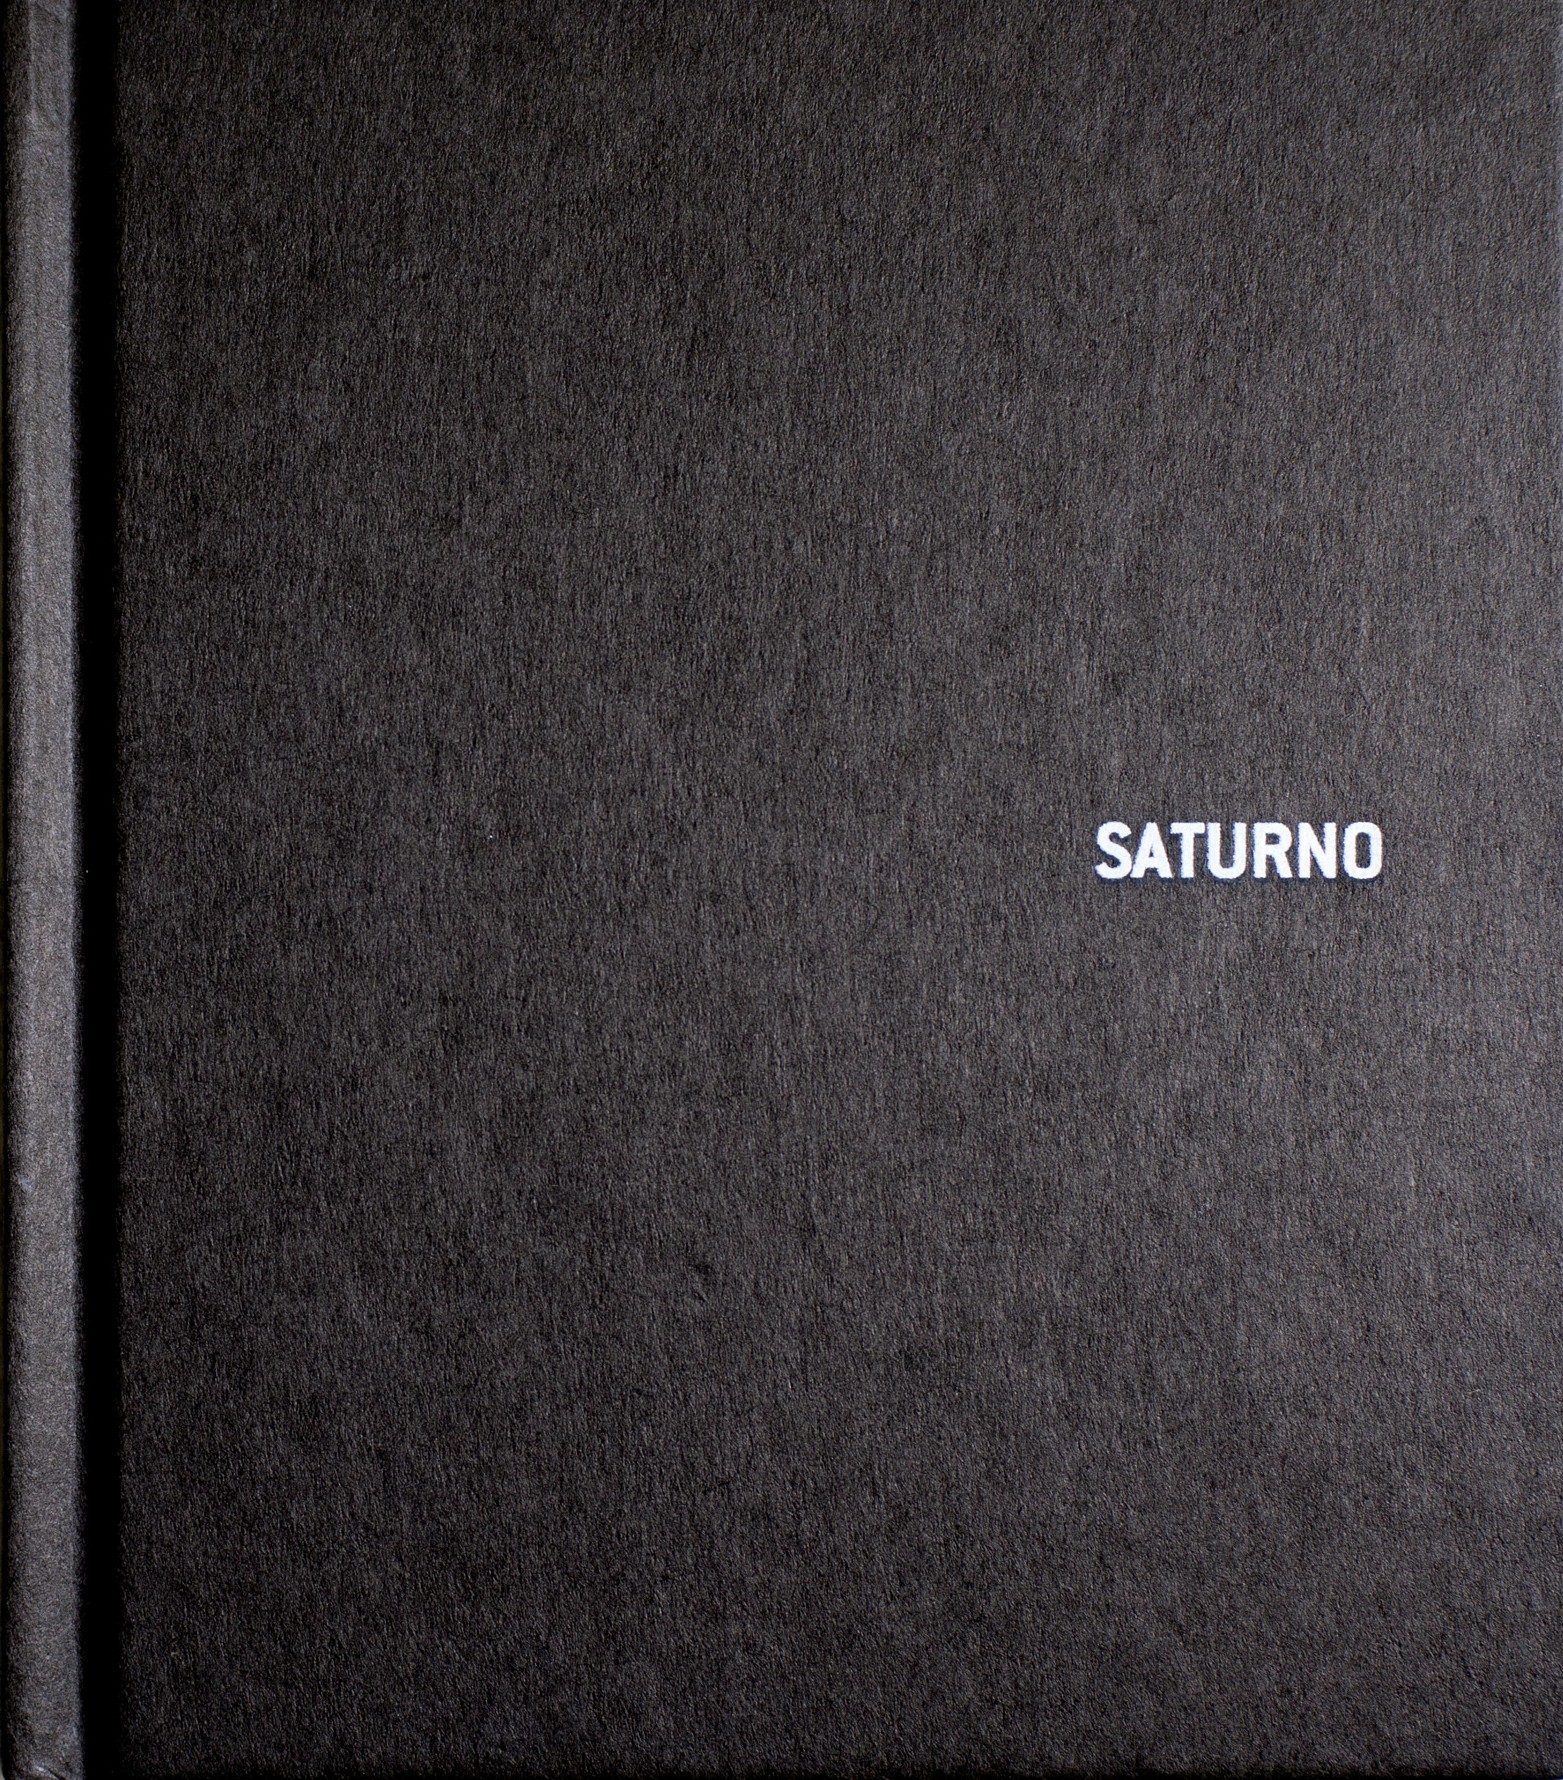 Saturno, Edu Monteiro